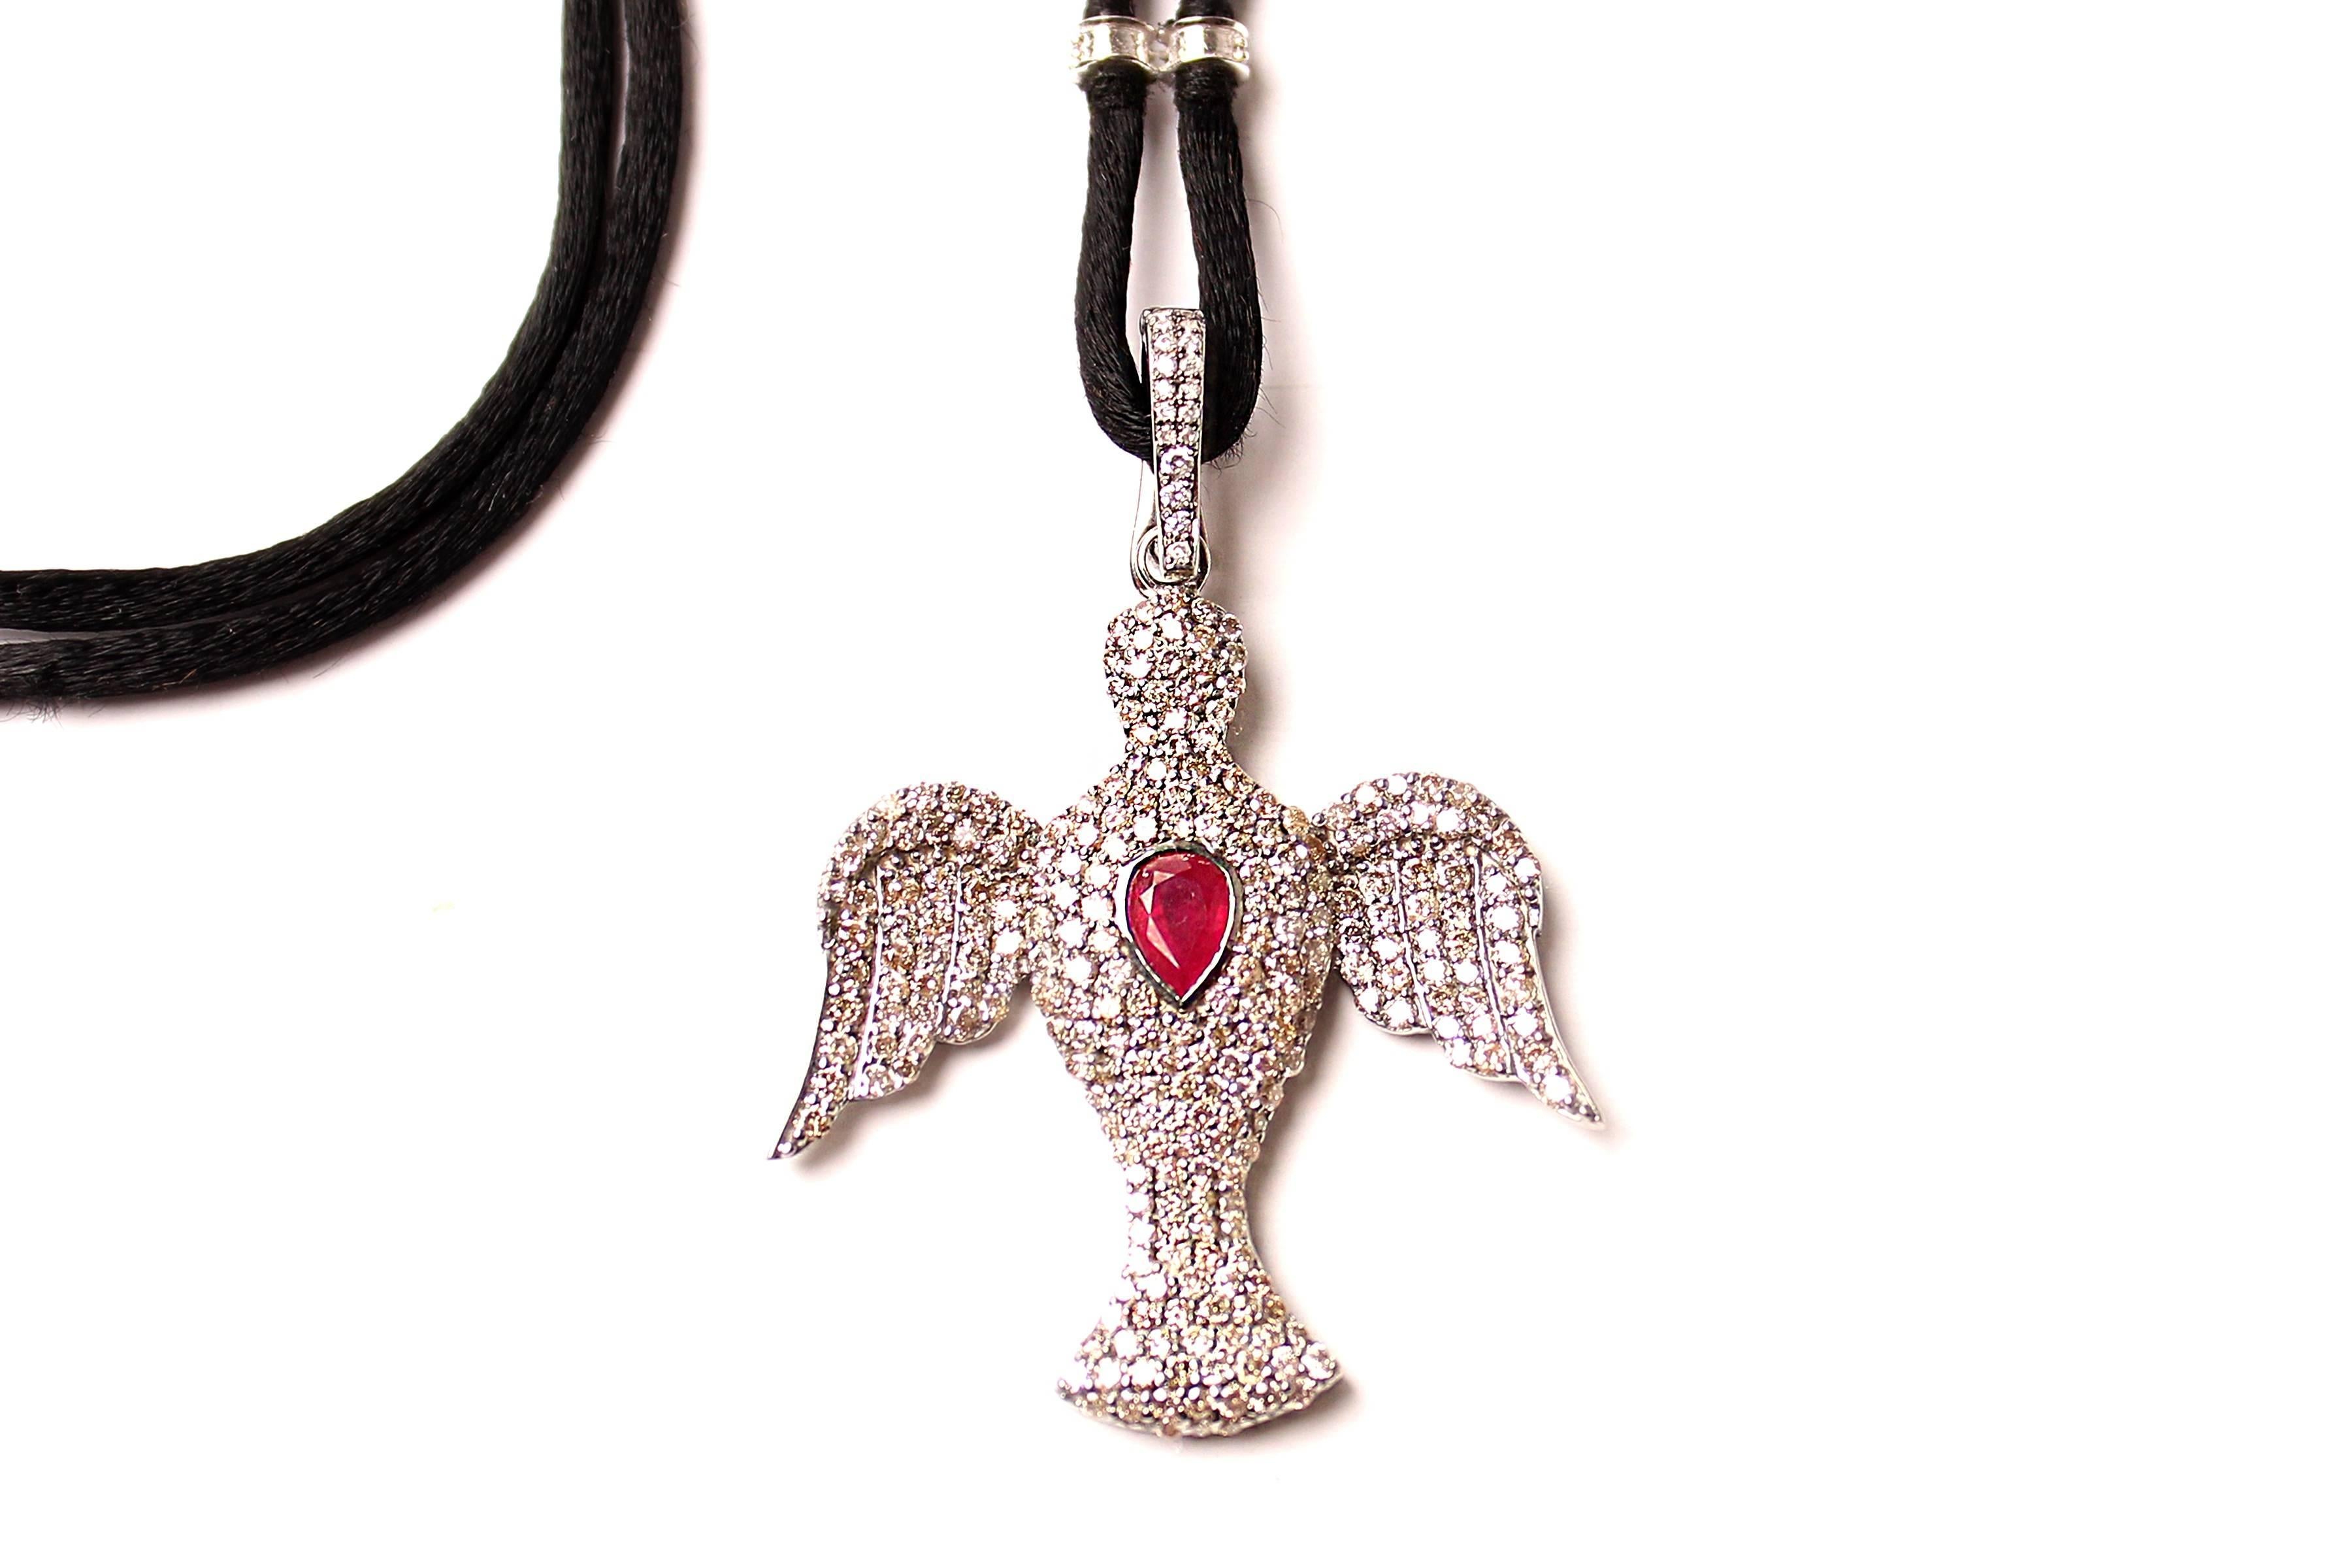 Contemporary Clarissa Bronfman Diamond and Ruby Bird Pendant on Adjustable Cord with Diamonds